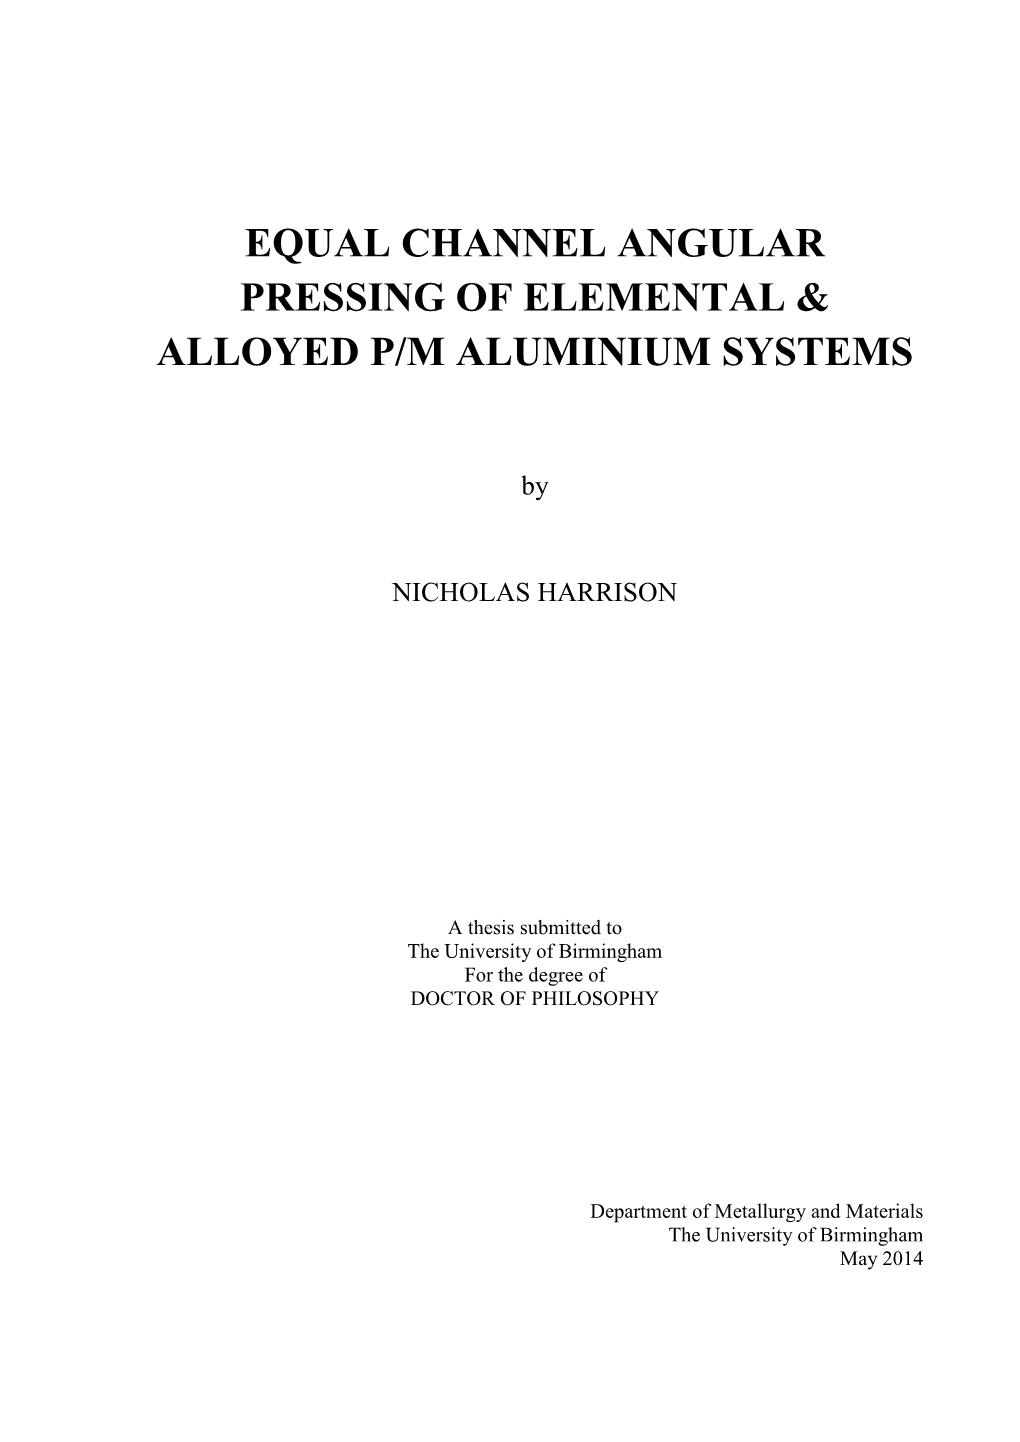 Equal Channel Angular Pressing of Elemental & Alloyed P/M Aluminium